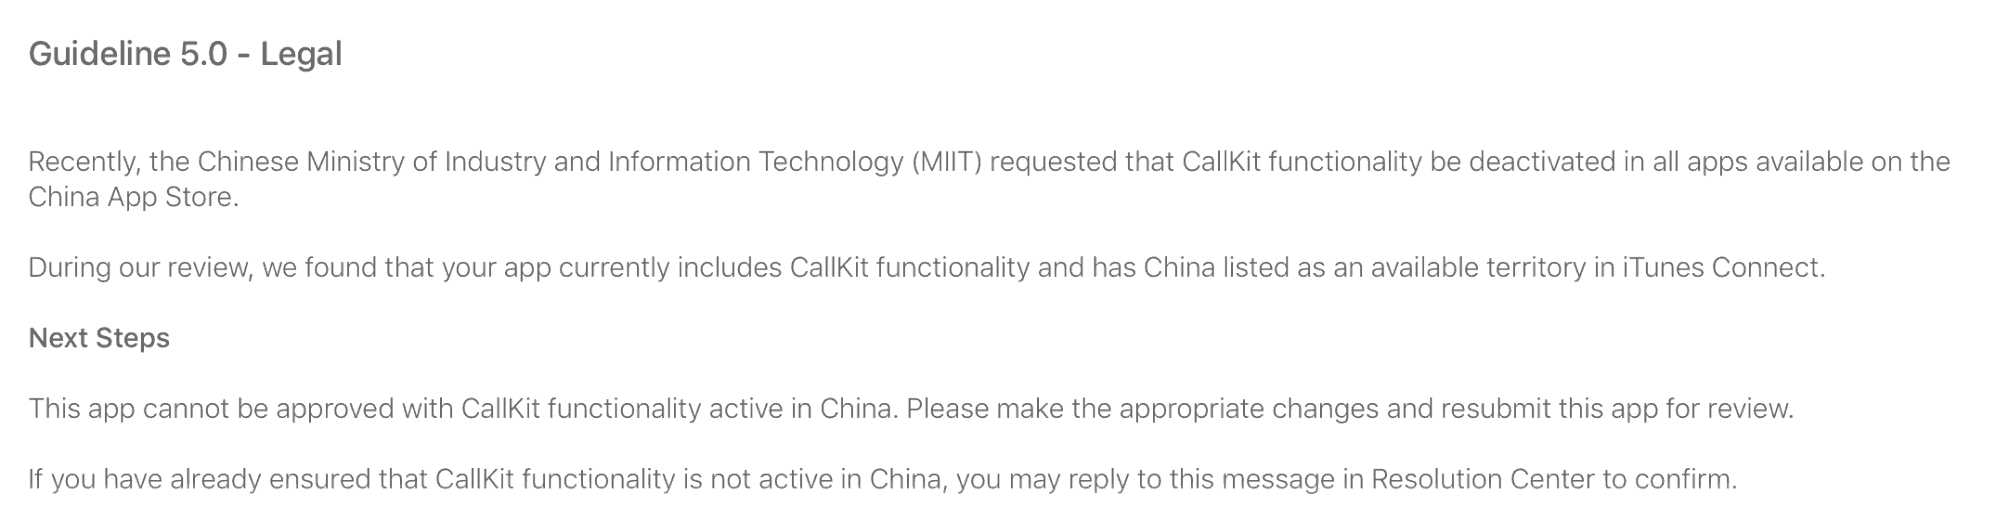 chinese app store ban callkit api 01a